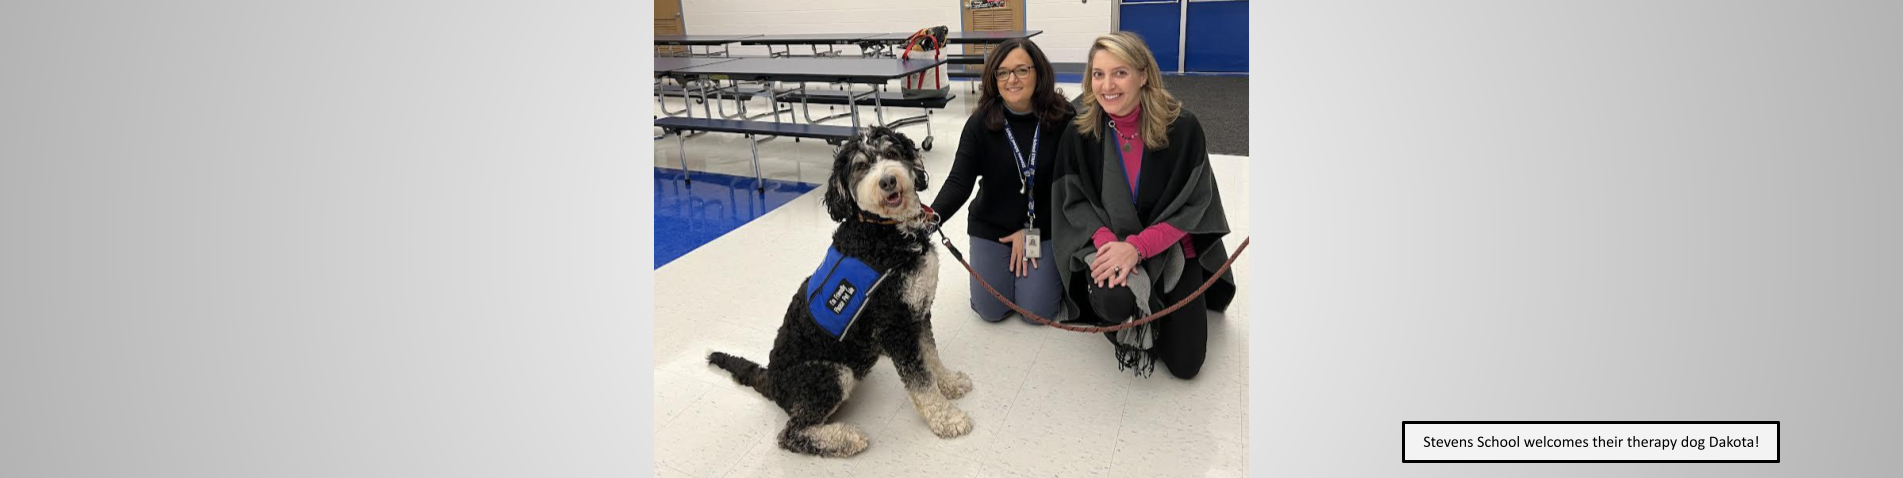 Stevens School welcomes their therapy dog Dakota!